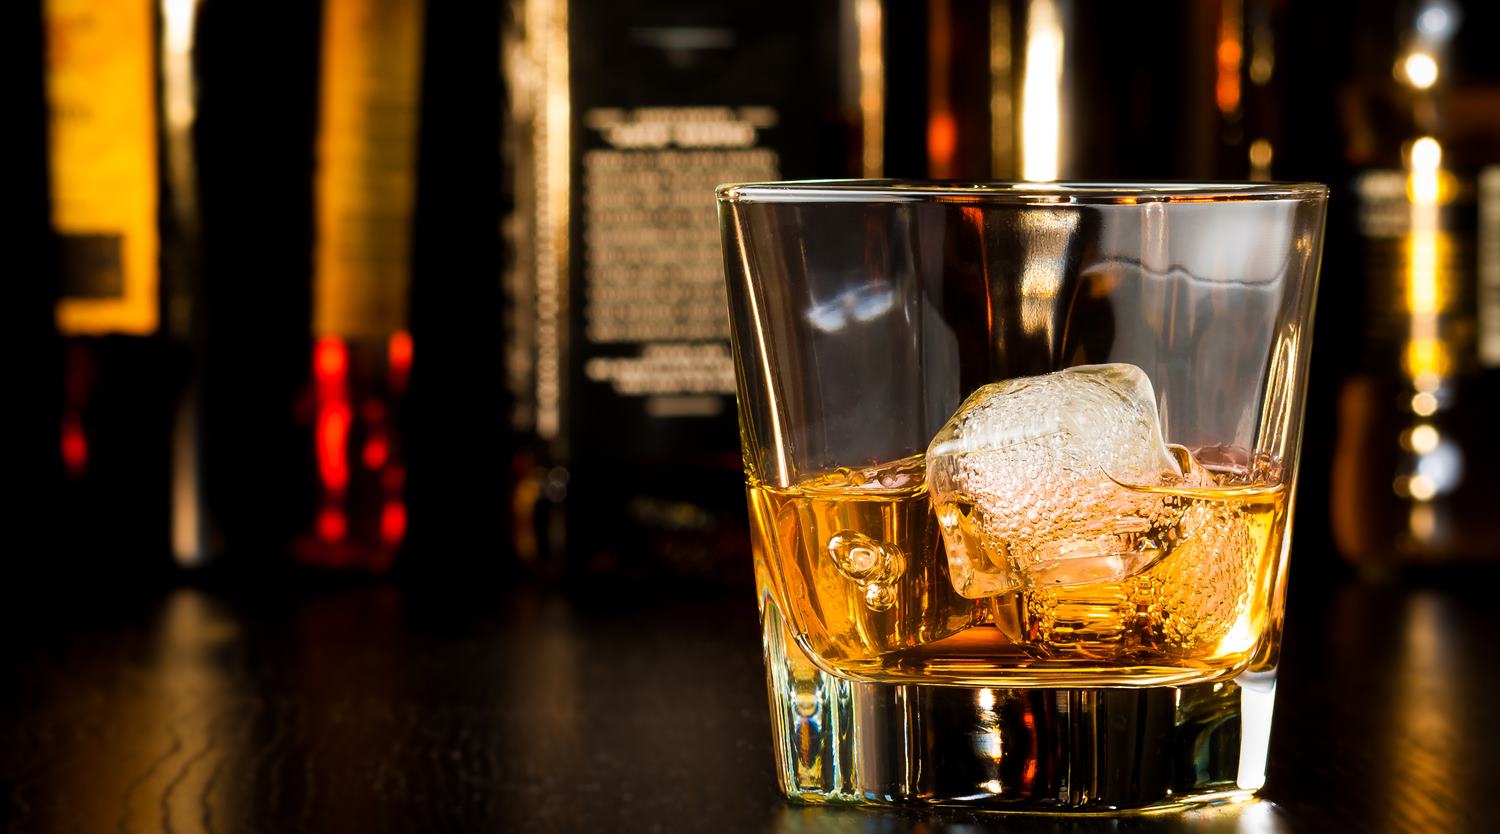 Too much water can make whiskies taste the same, WSU Insider